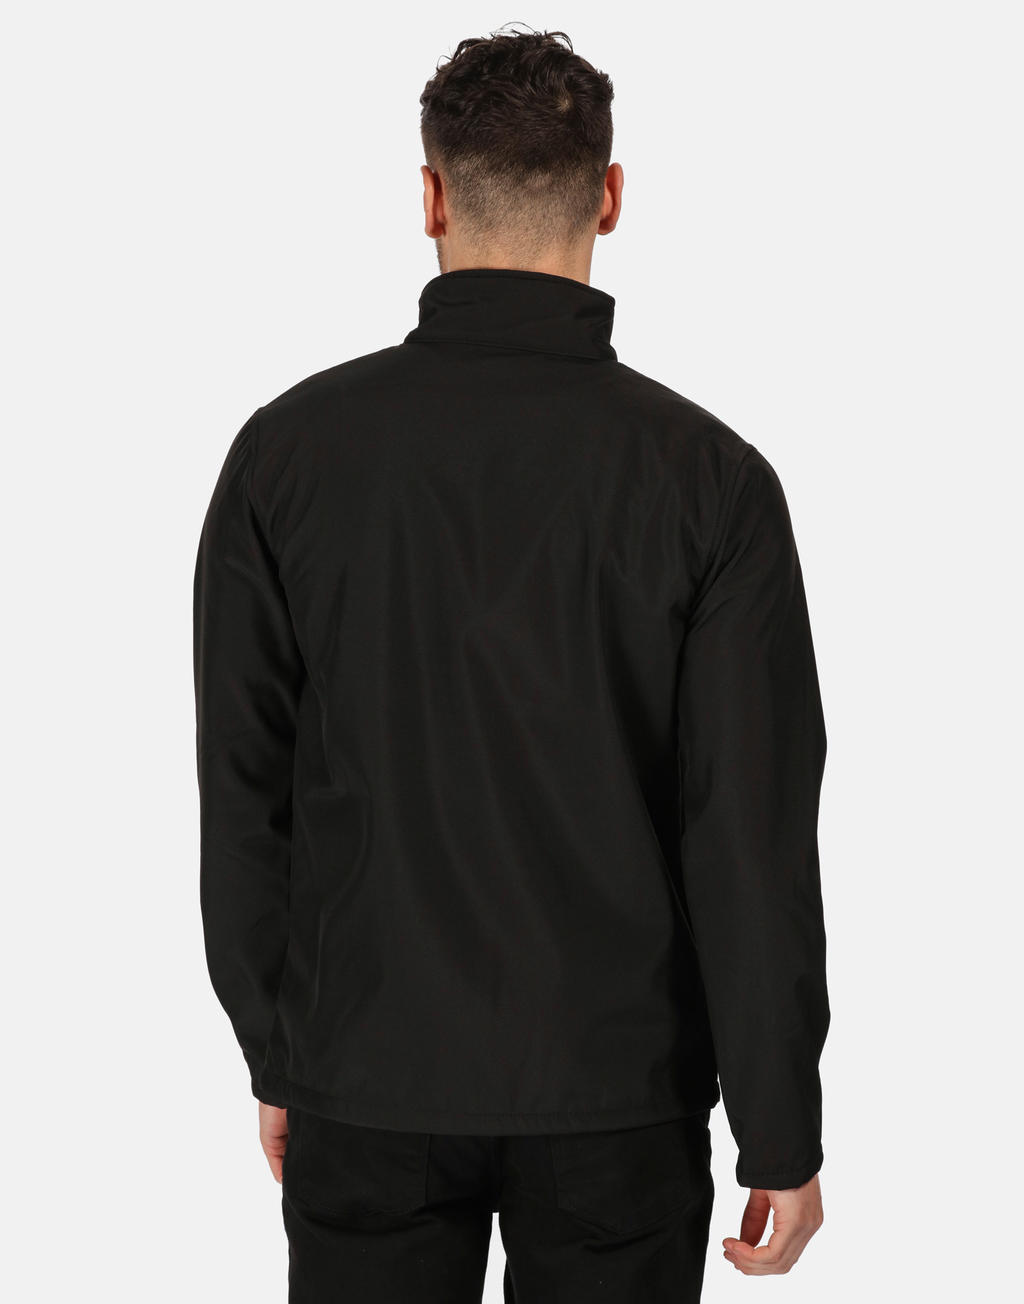  Ablaze 3 Layer Softshell Jacket in Farbe Black/Black